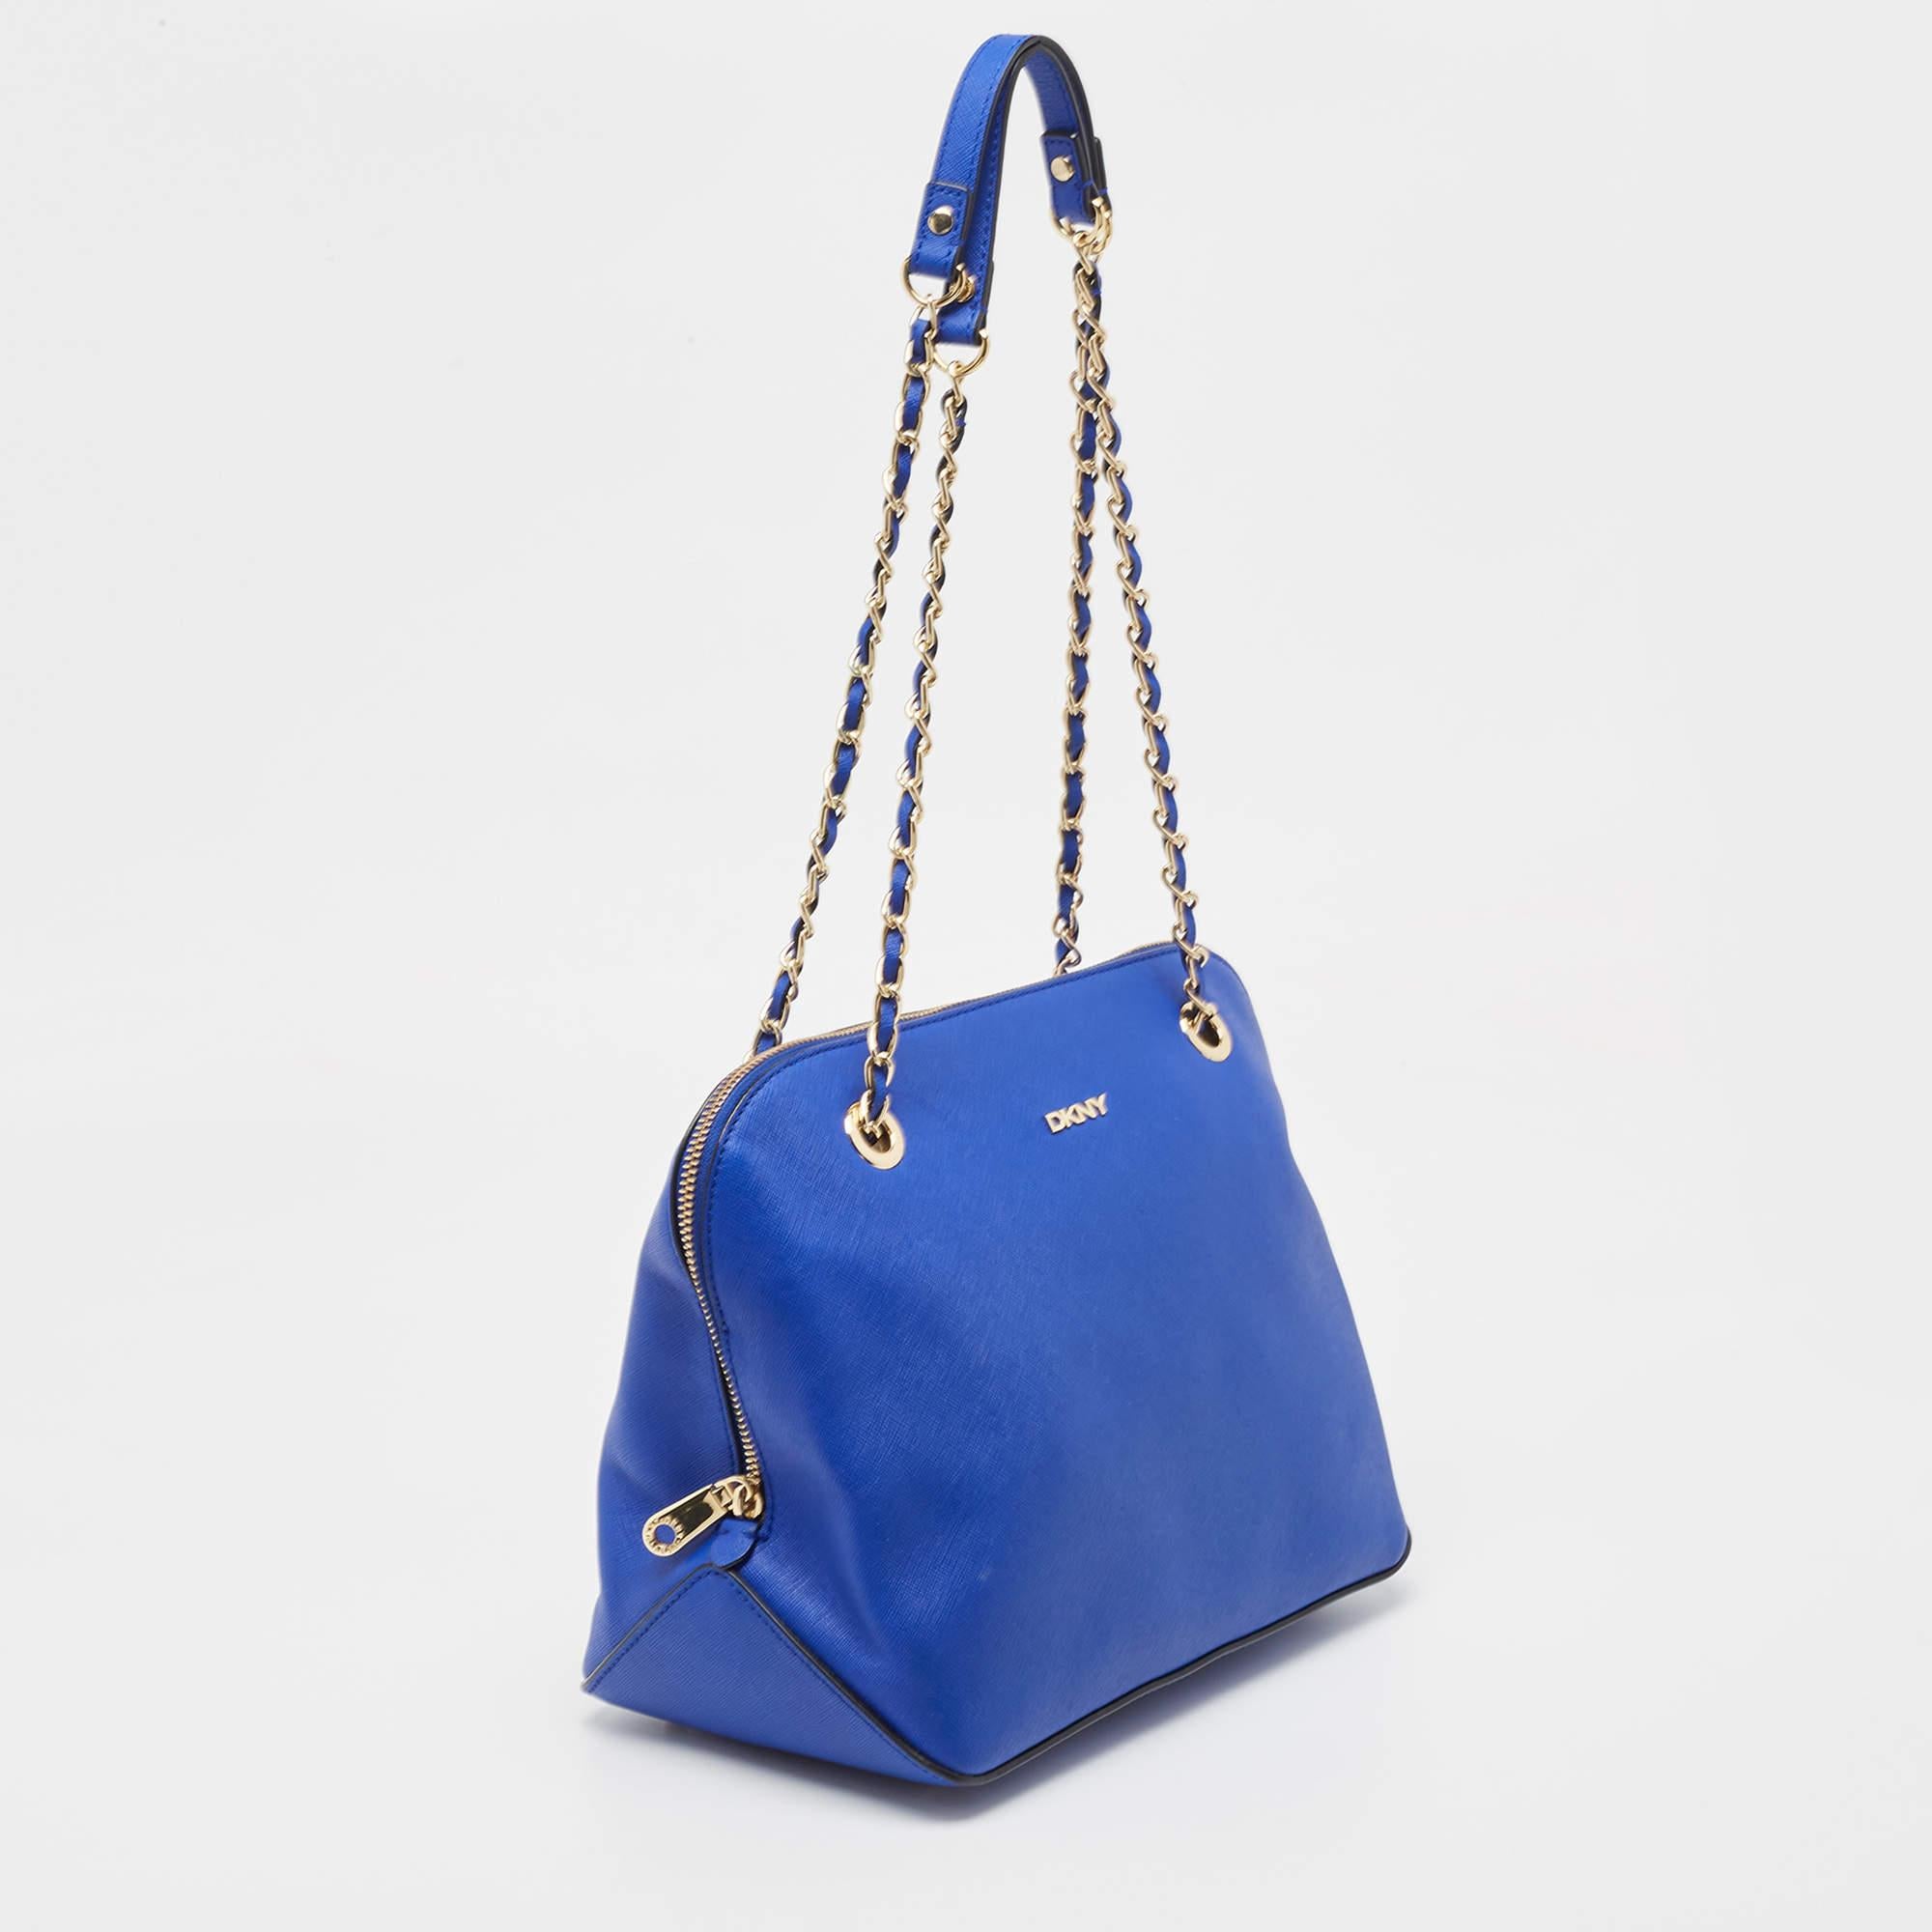 Women's Dkny Blue Saffiano Leather Dome Shoulder Bag